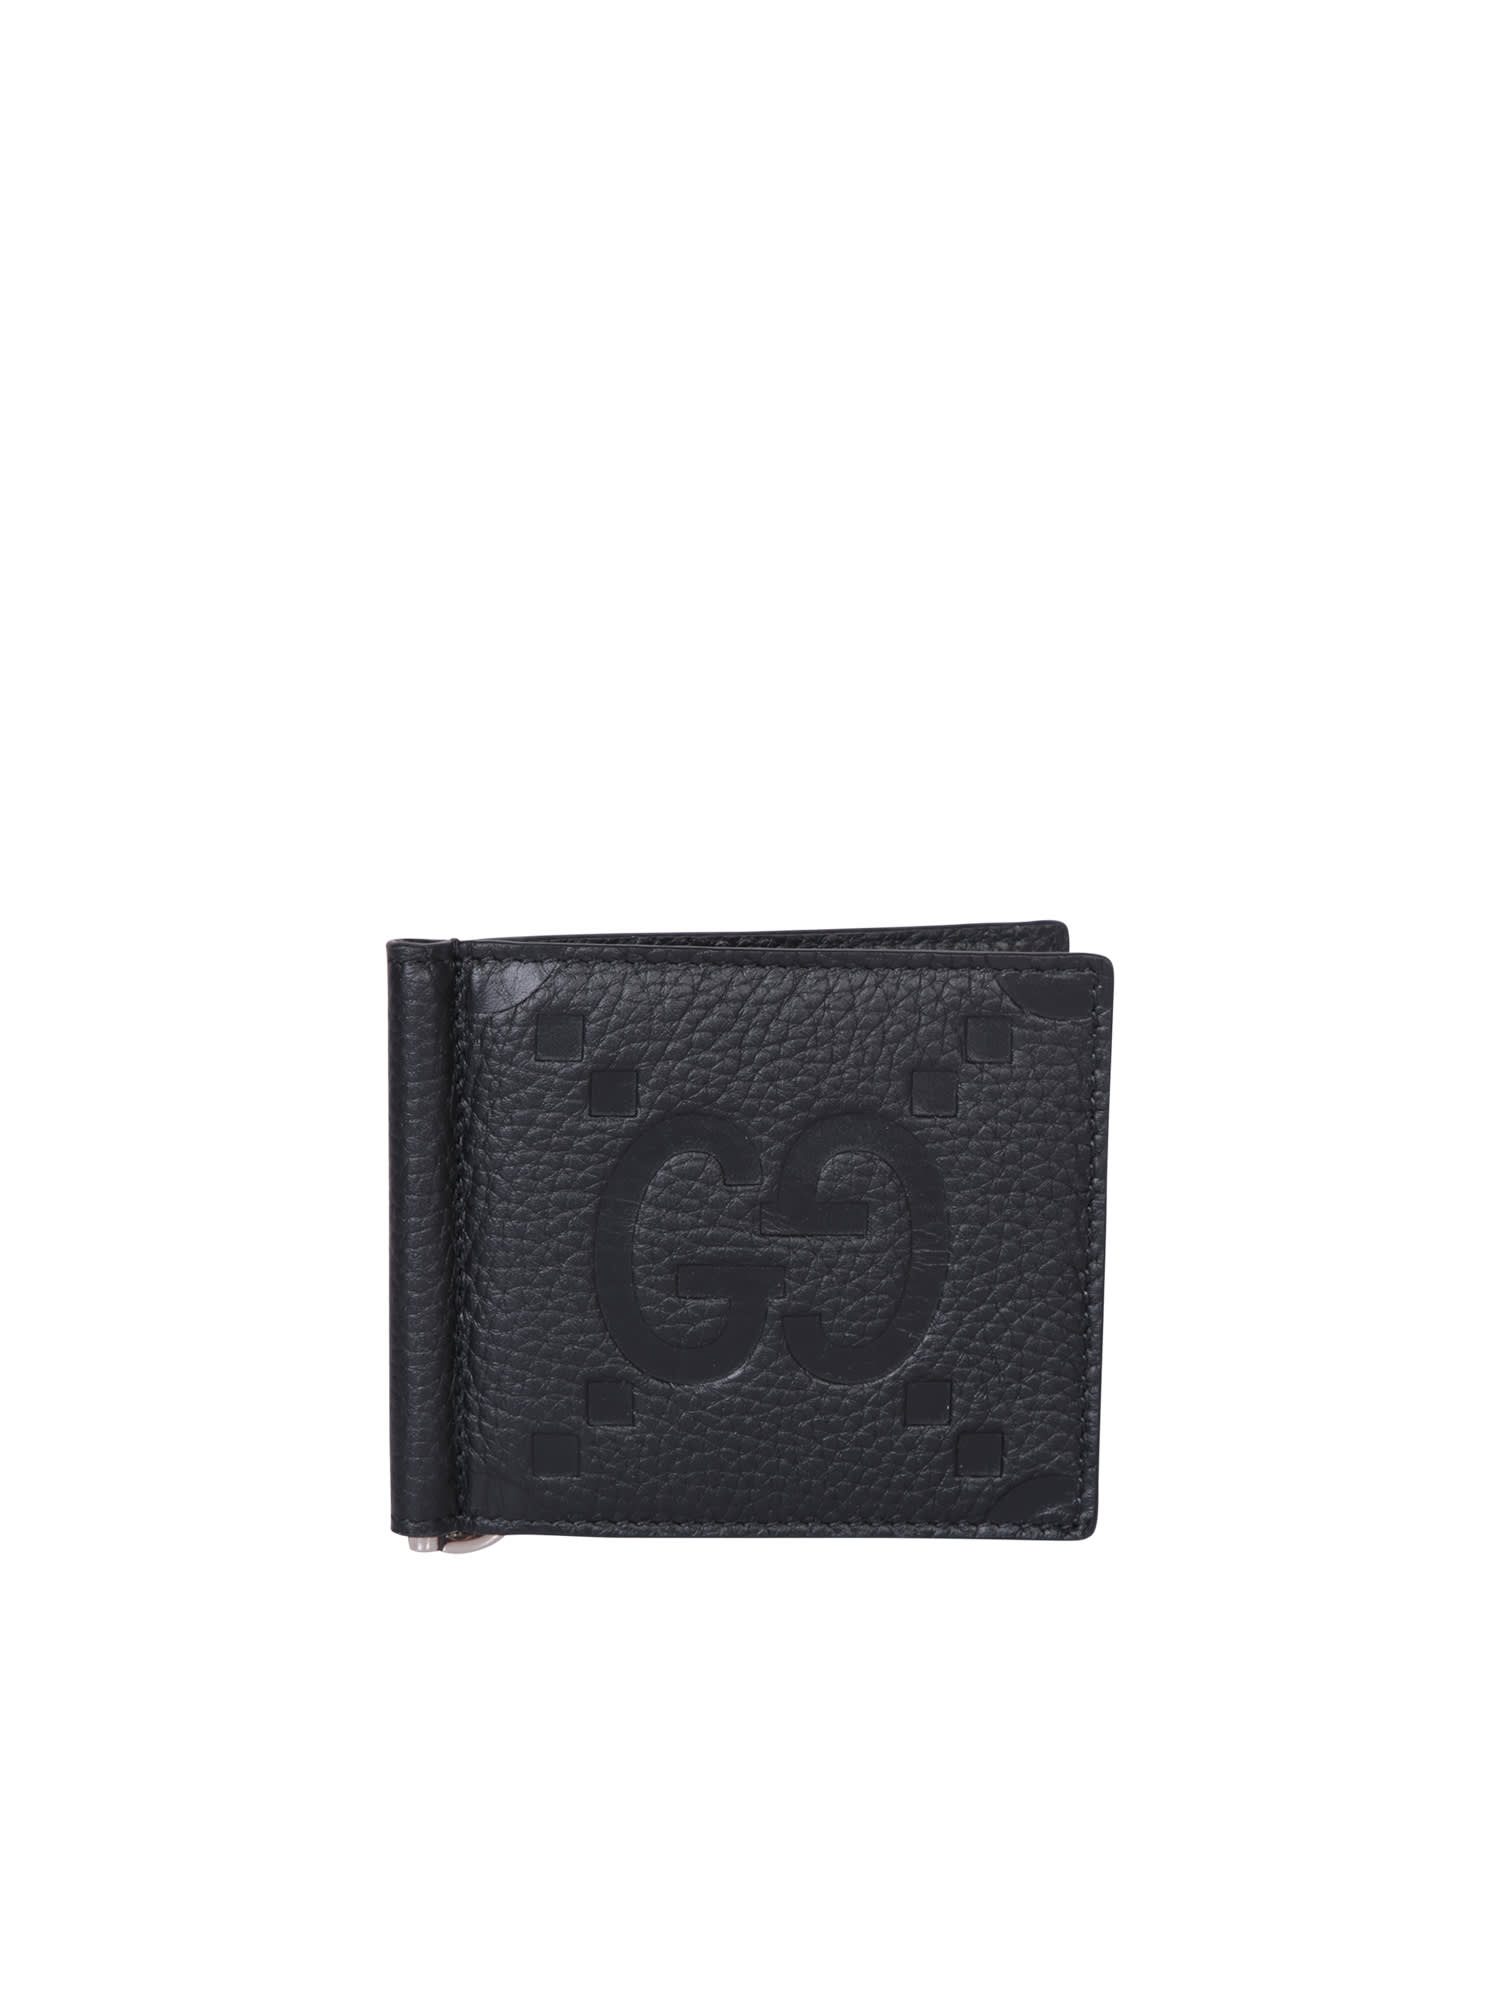 Gucci Money Clip Card Case GG Supreme Beige/Black in Coated Canvas